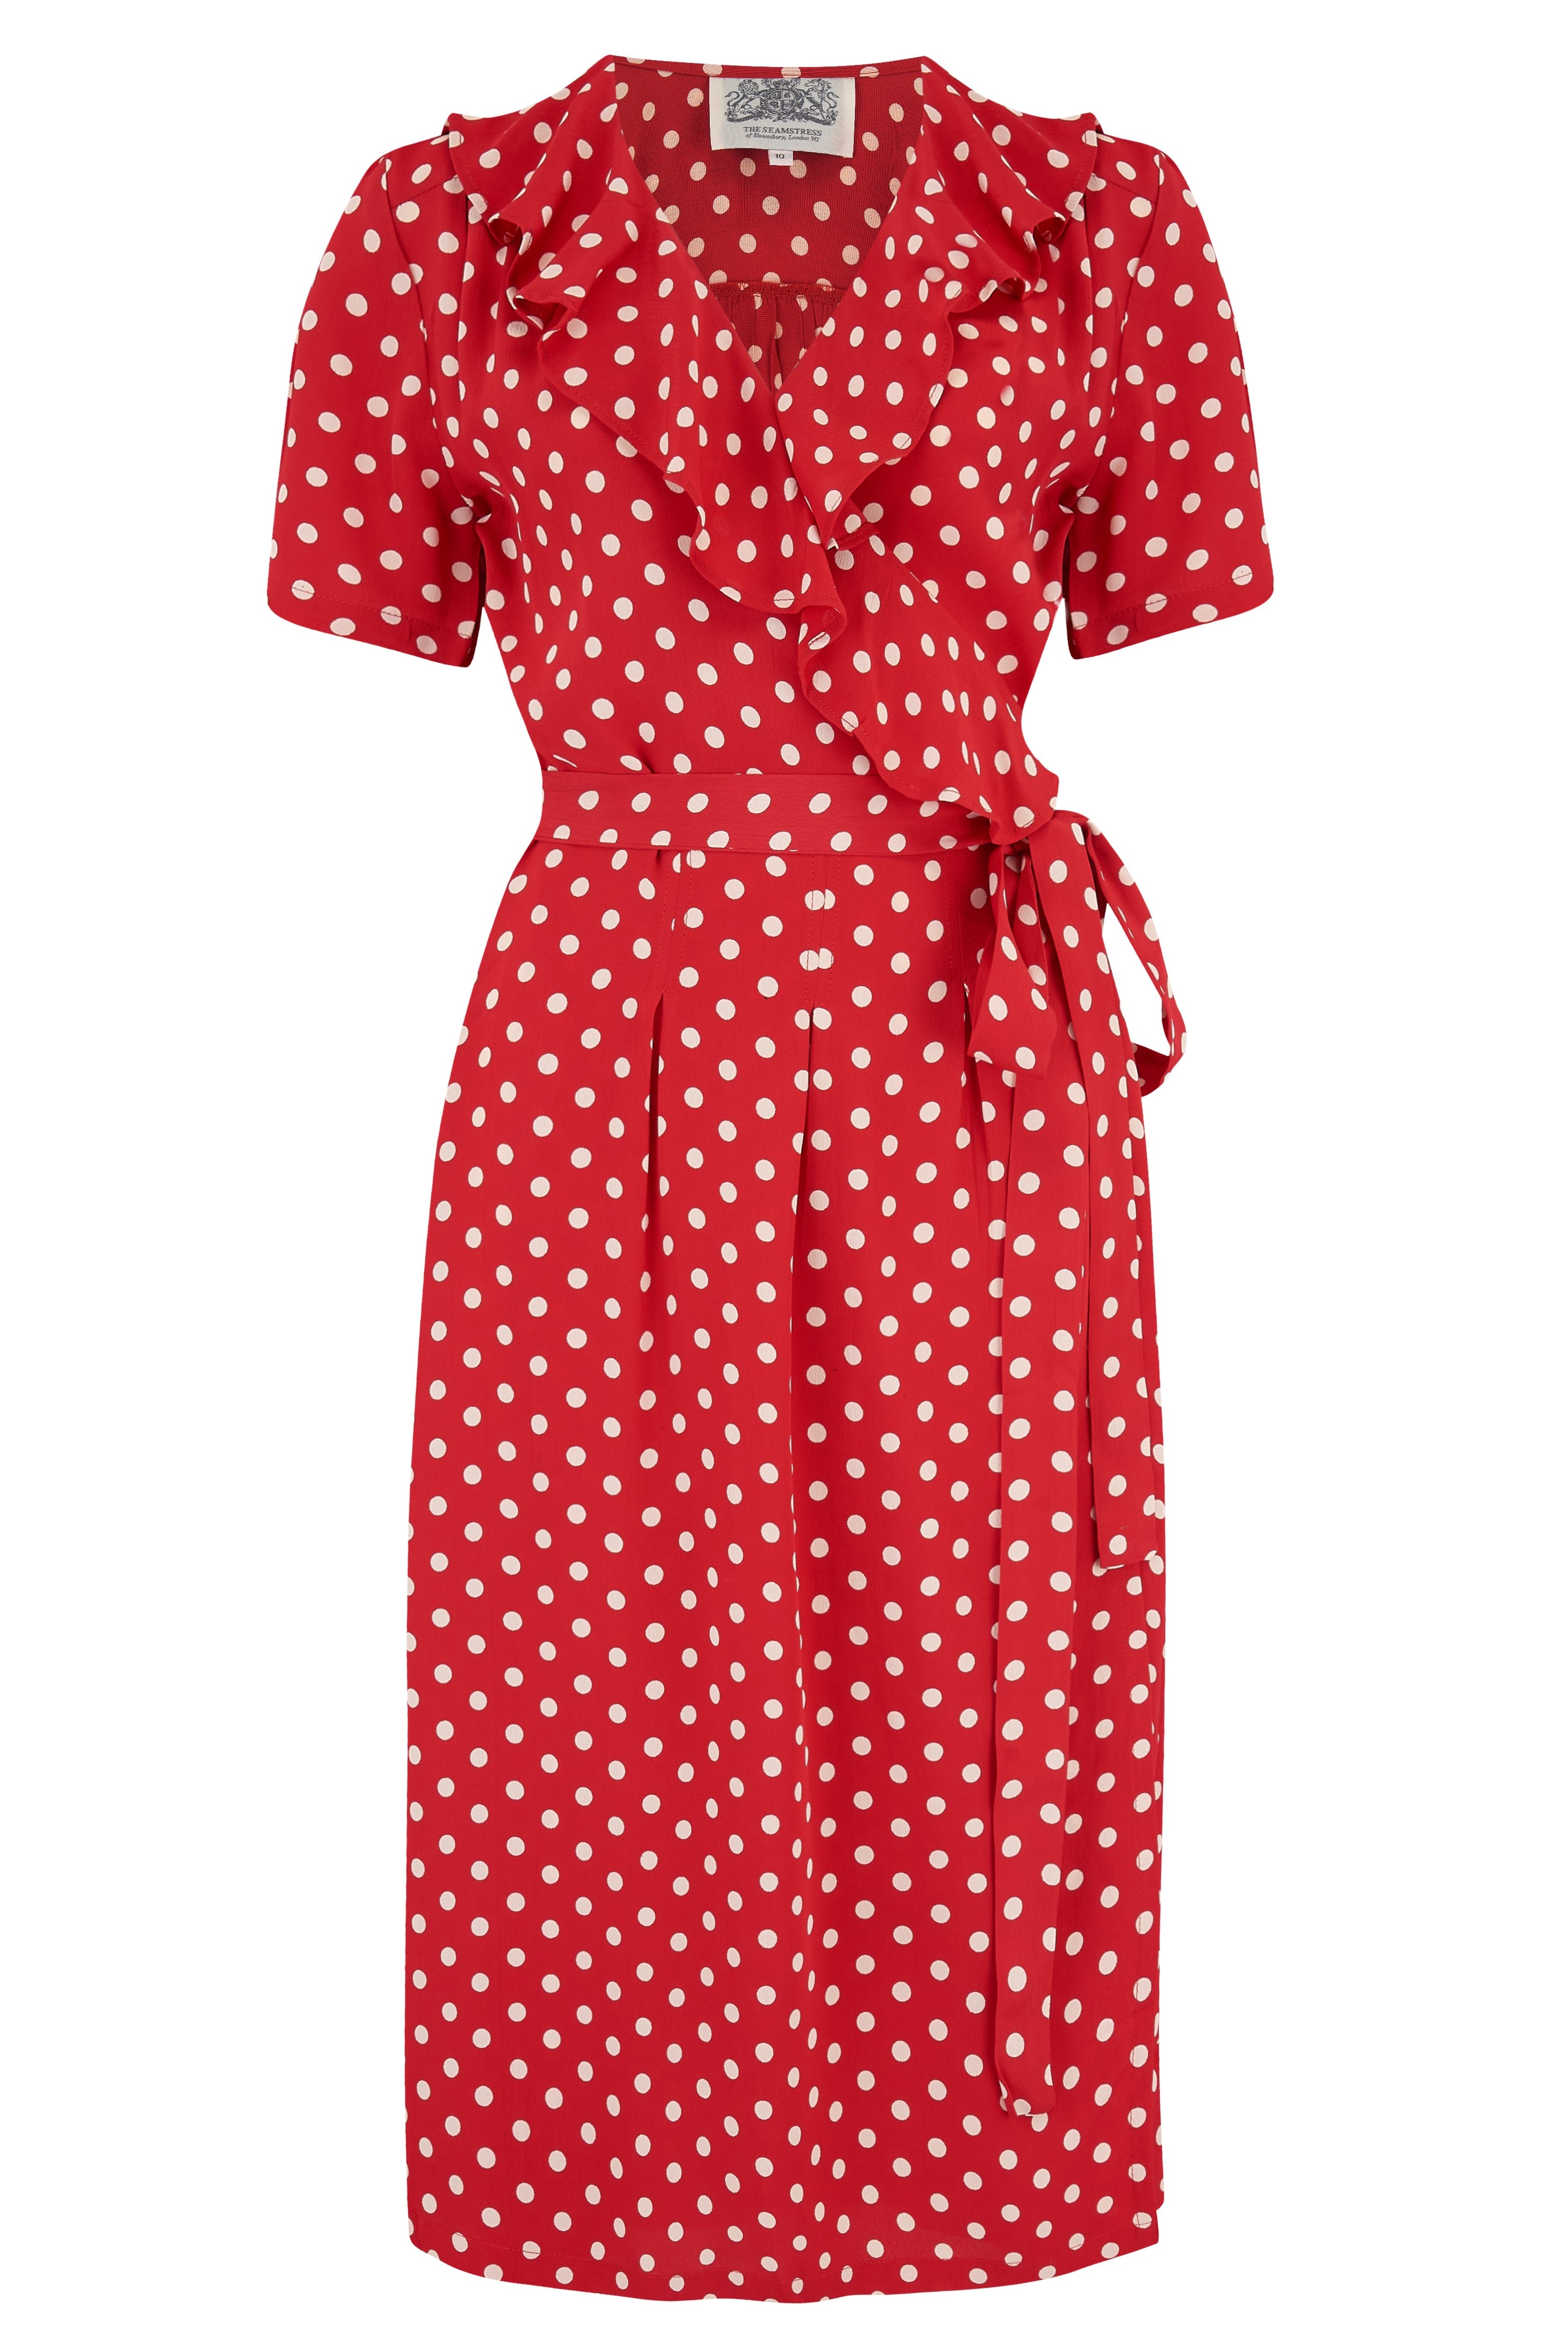 Vintage Polka Dot Dresses - 50s Spotty and Ditsy Prints